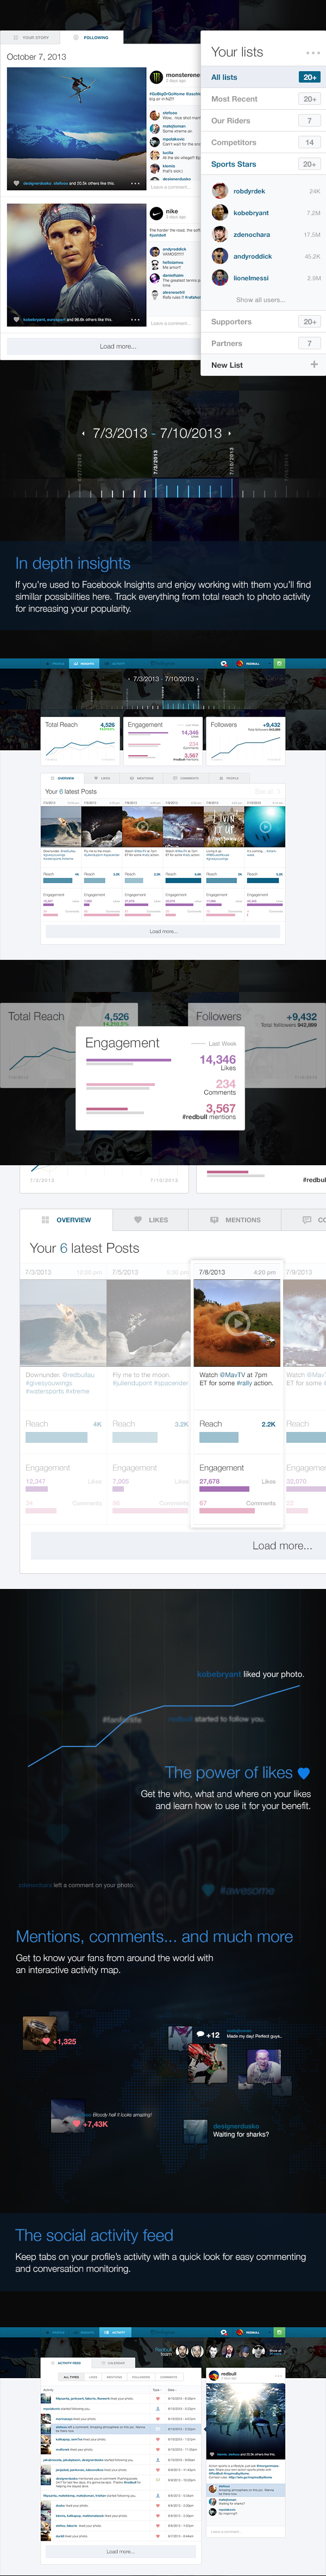 instagram Case Study user interface web application user experience social media analytics